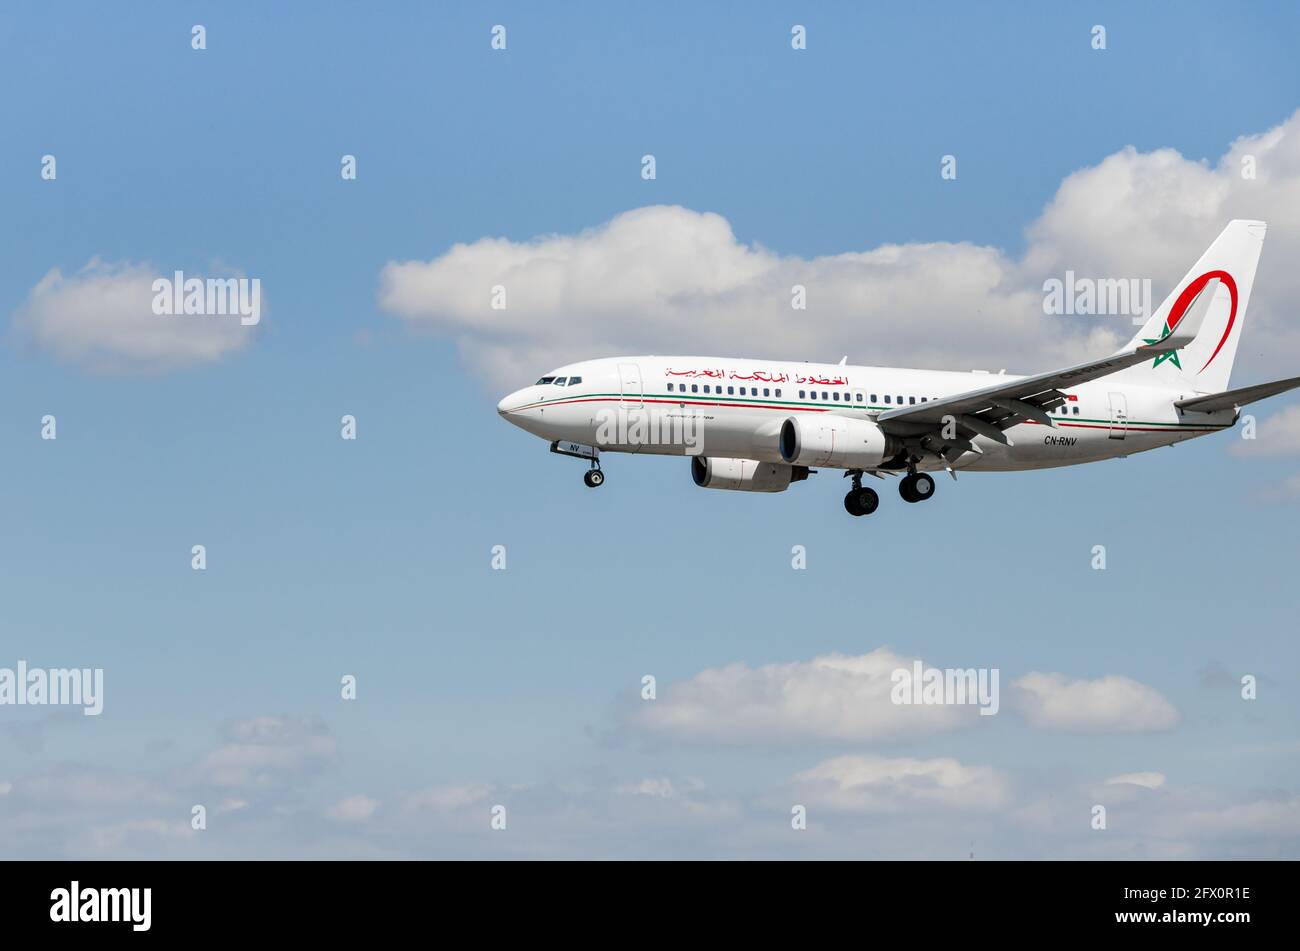 Barcelona, Spanien; 27. April 2019: Boeing 737-700 der Fluggesellschaft Royal Air Maroc, Landung auf dem Flughafen Josep Tarradellas in Barcelona-El Prat Stockfoto